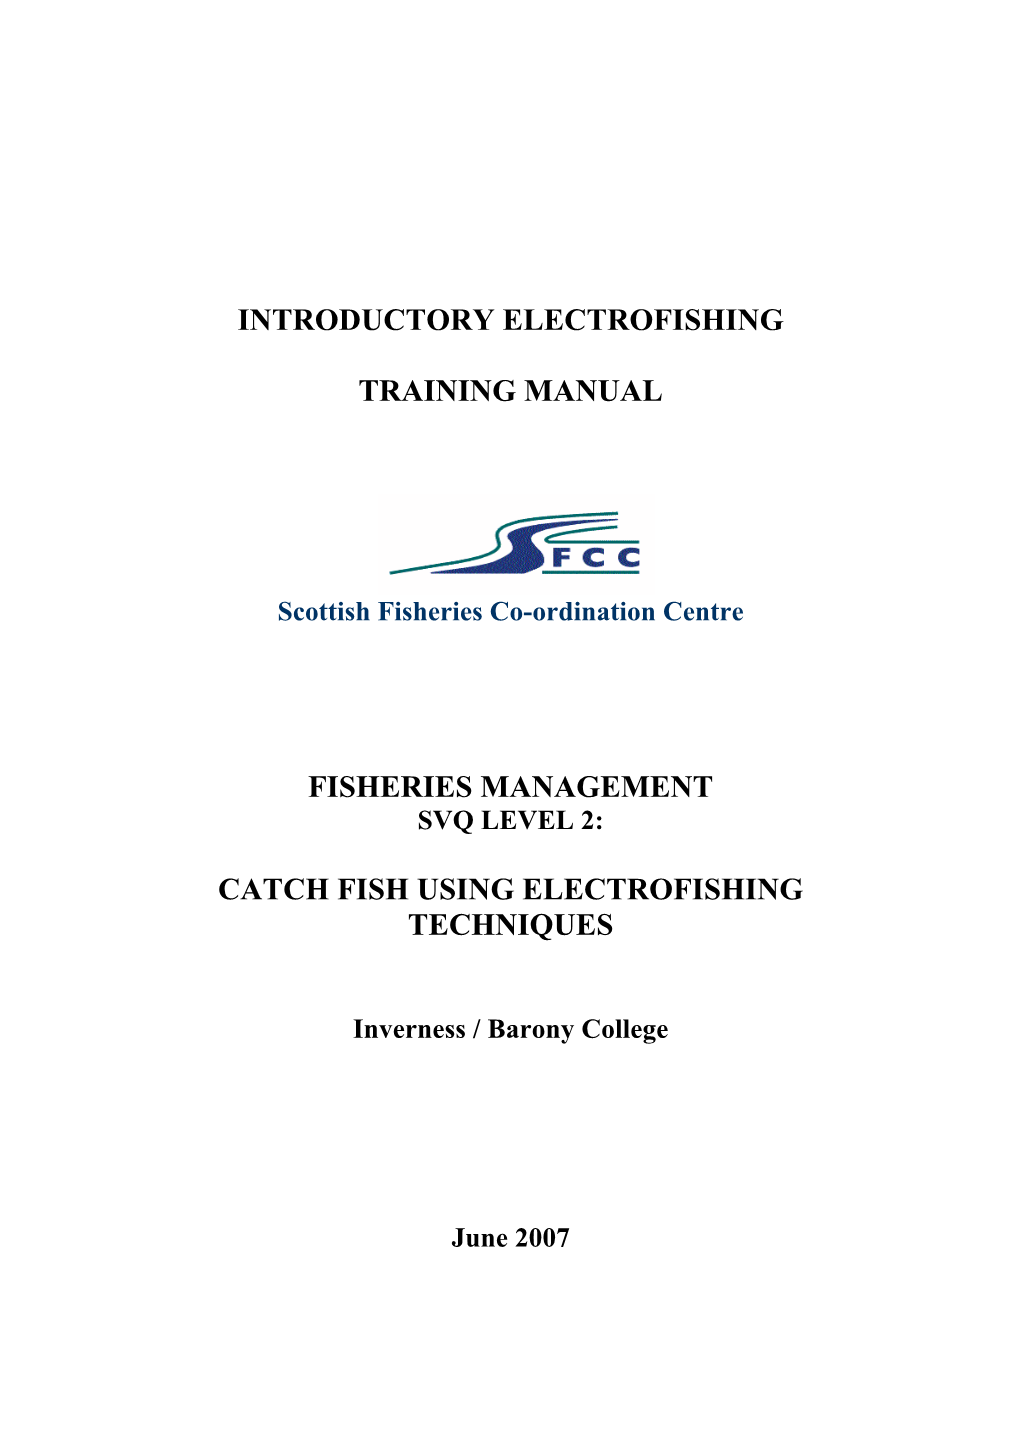 Introductory Electrofishing Training Manual Fisheries